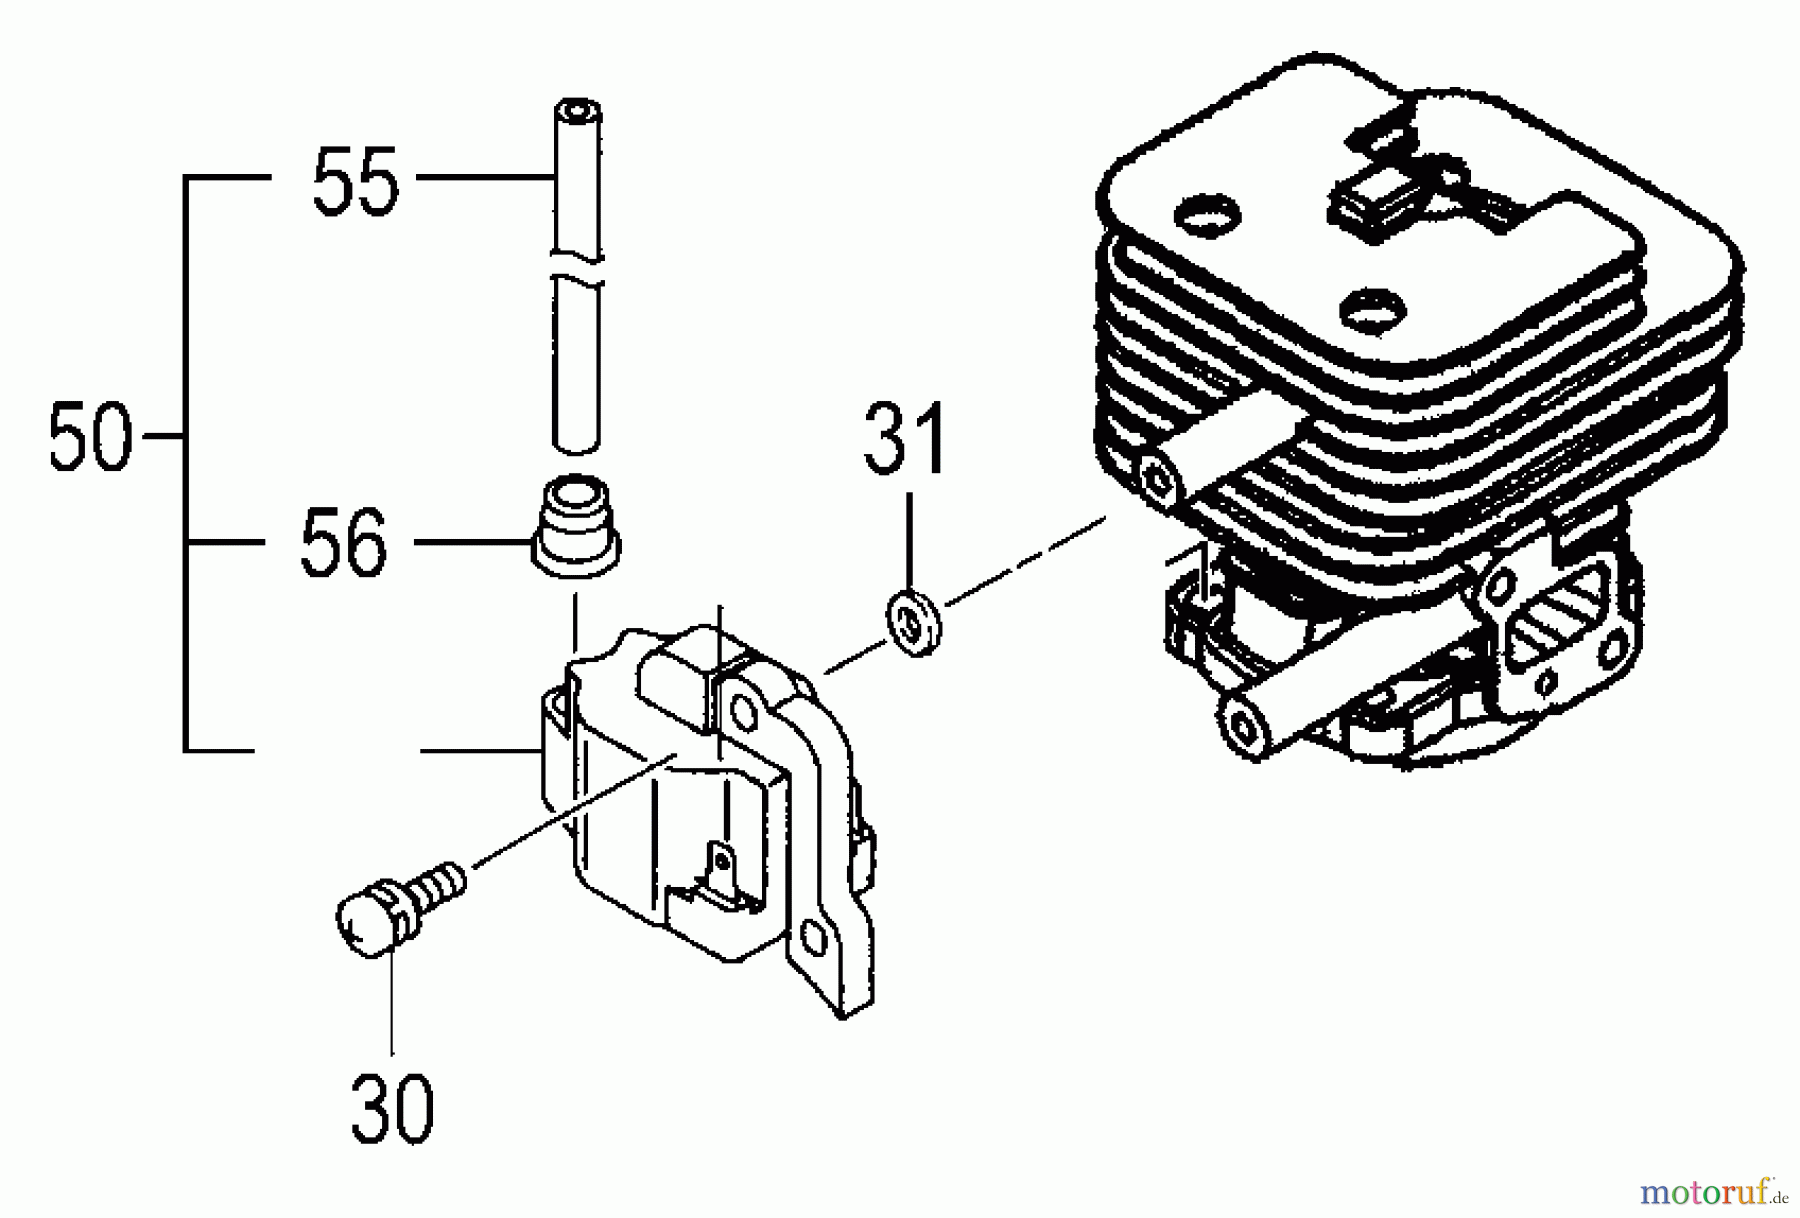  Tanaka Trimmer, Motorsensen TBC-340D - Tanaka Grass Trimmer / Brush Cutter Ignition Coil /Washers